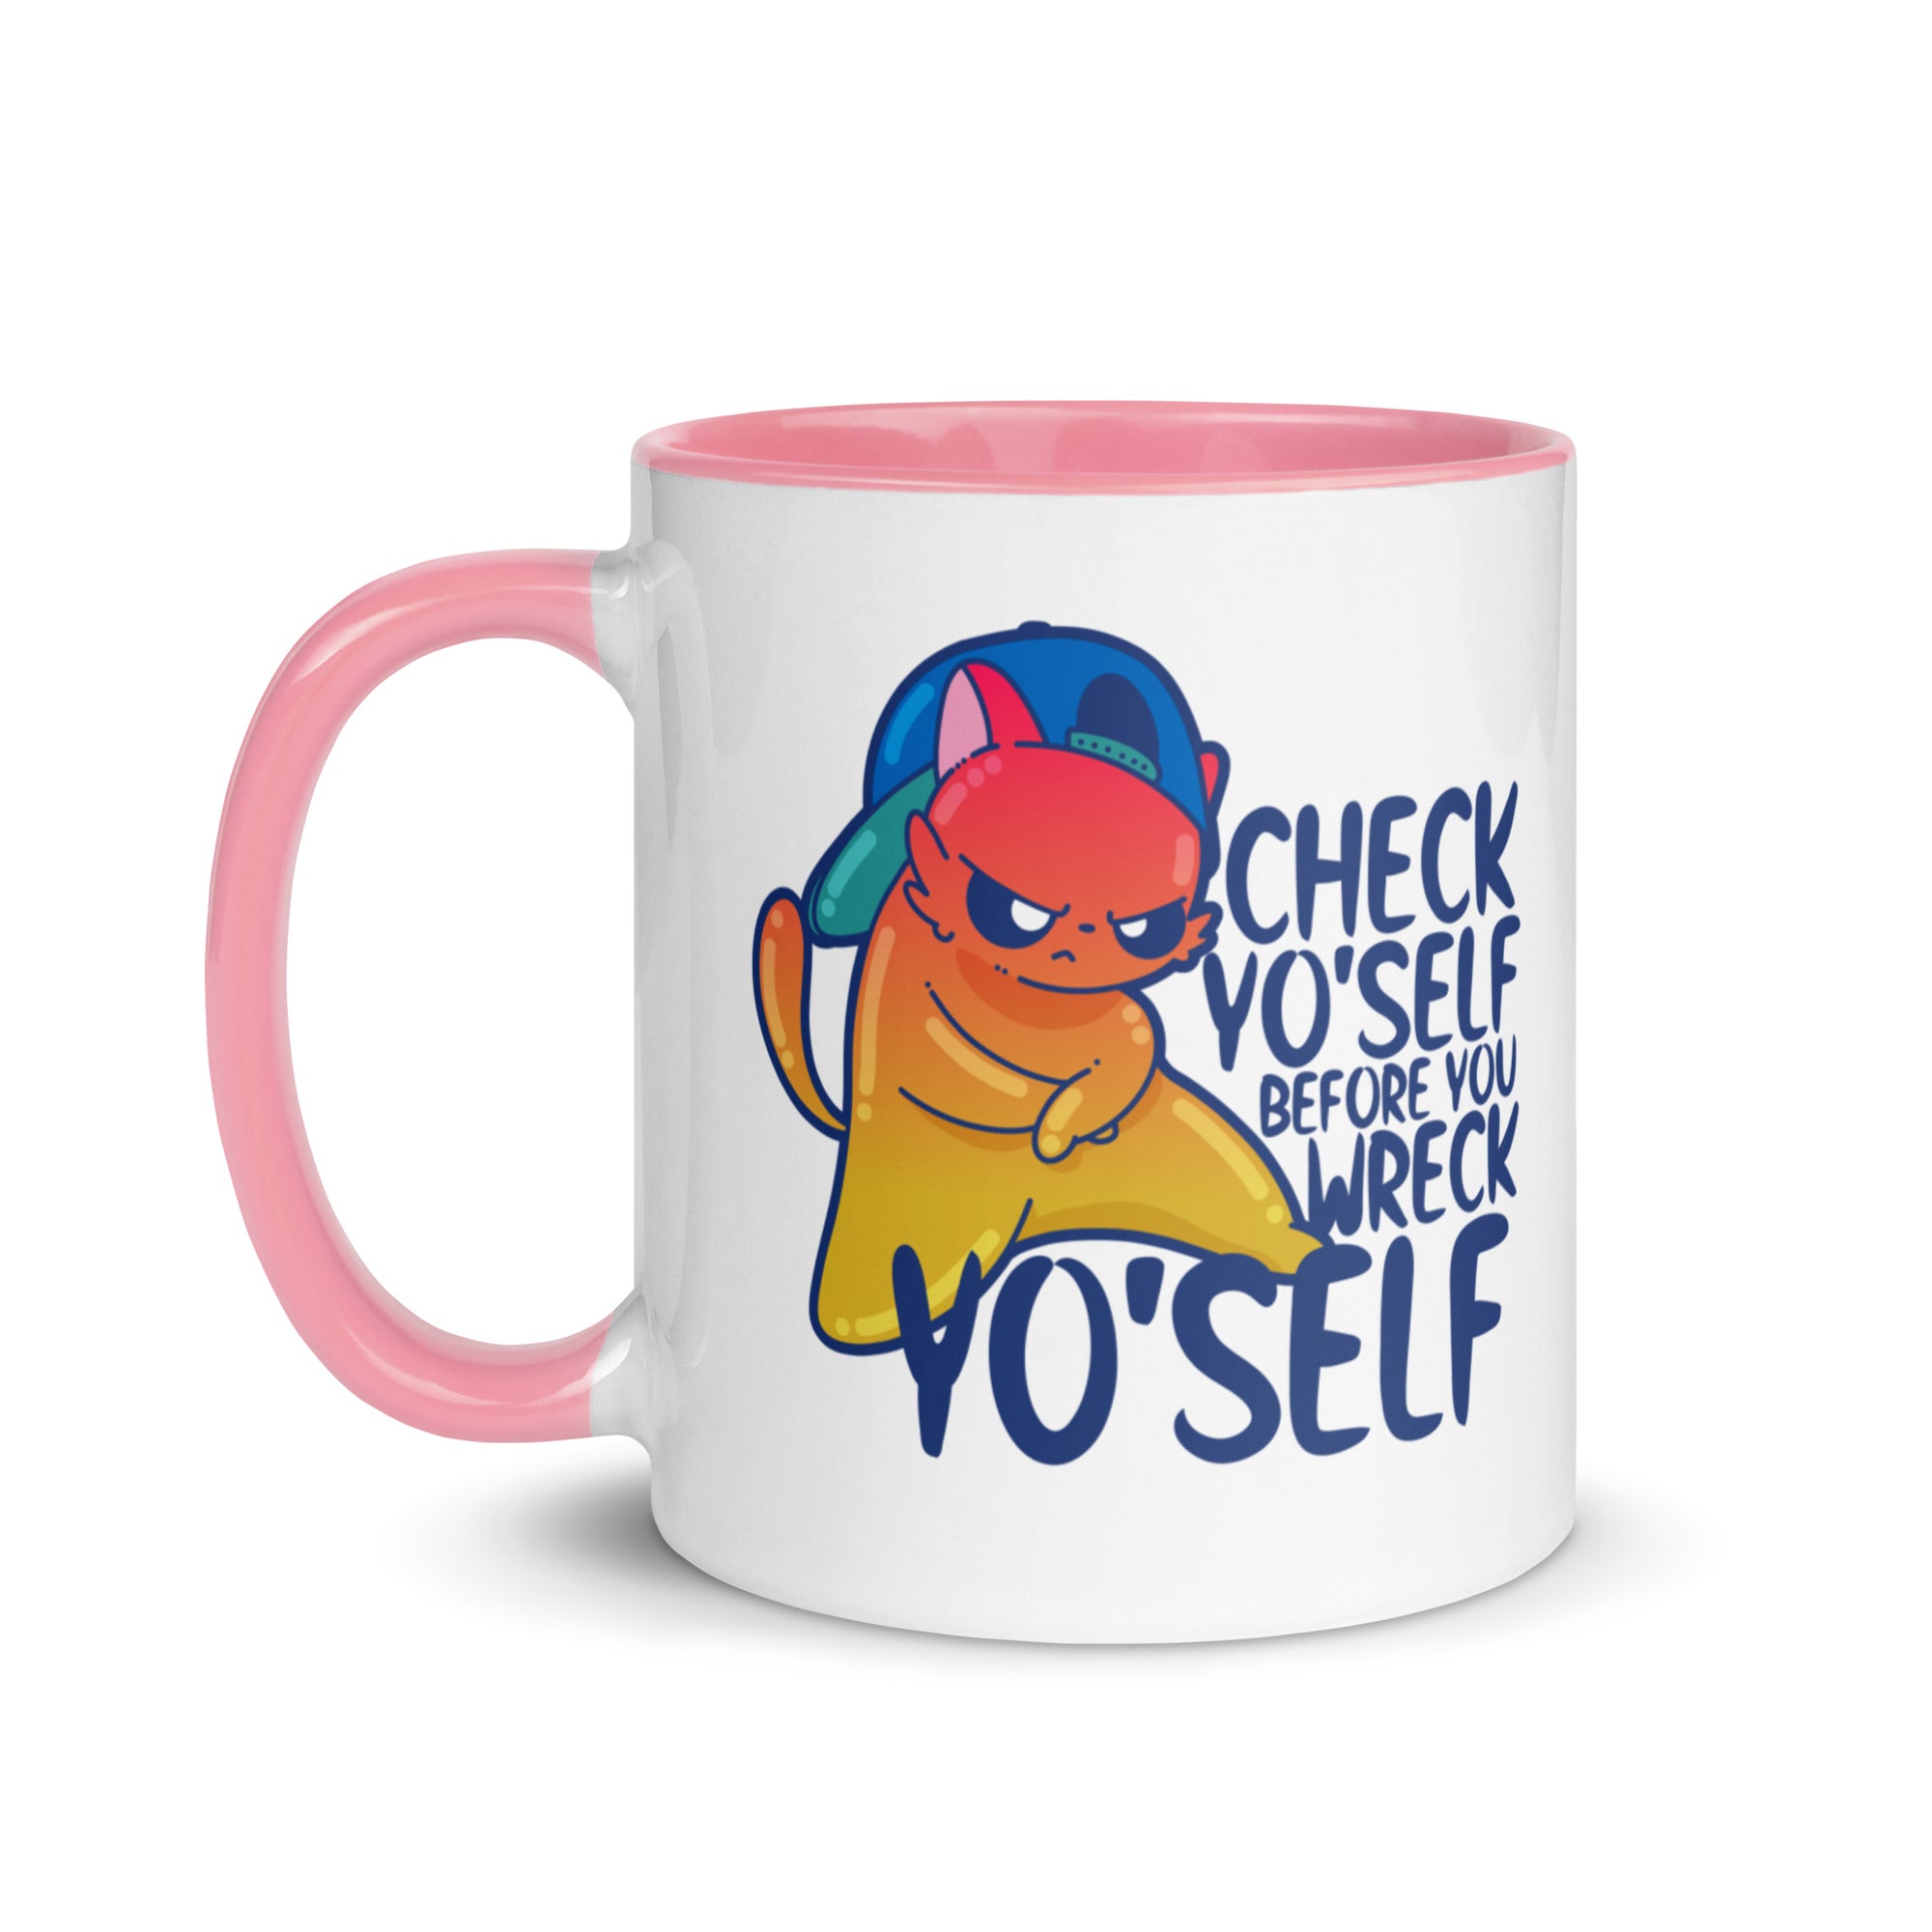 CHECK YOSELF - Mug With Color Inside - ChubbleGumLLC